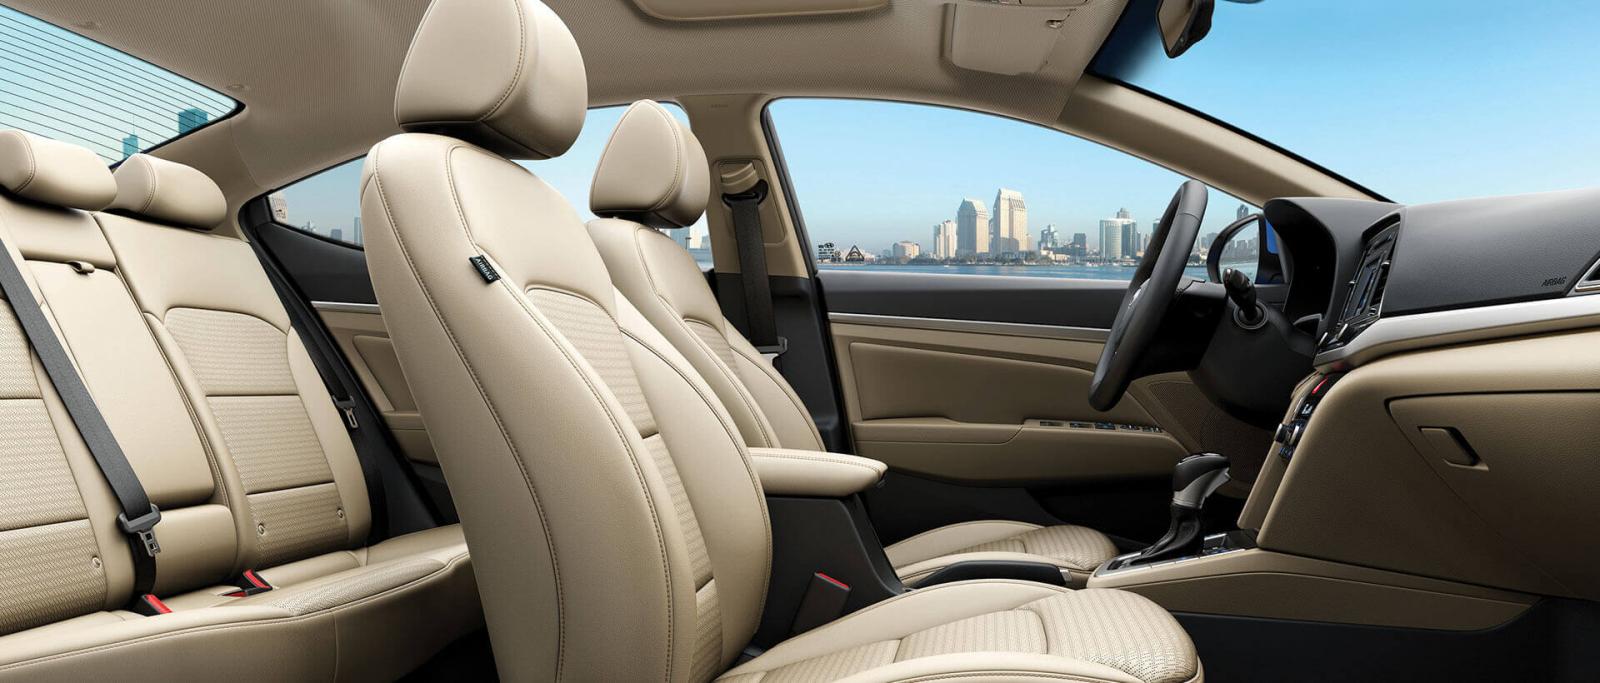 Ghế nội thất của Hyundai Elantra Sport 2018 được bọc da a1 cao cấp